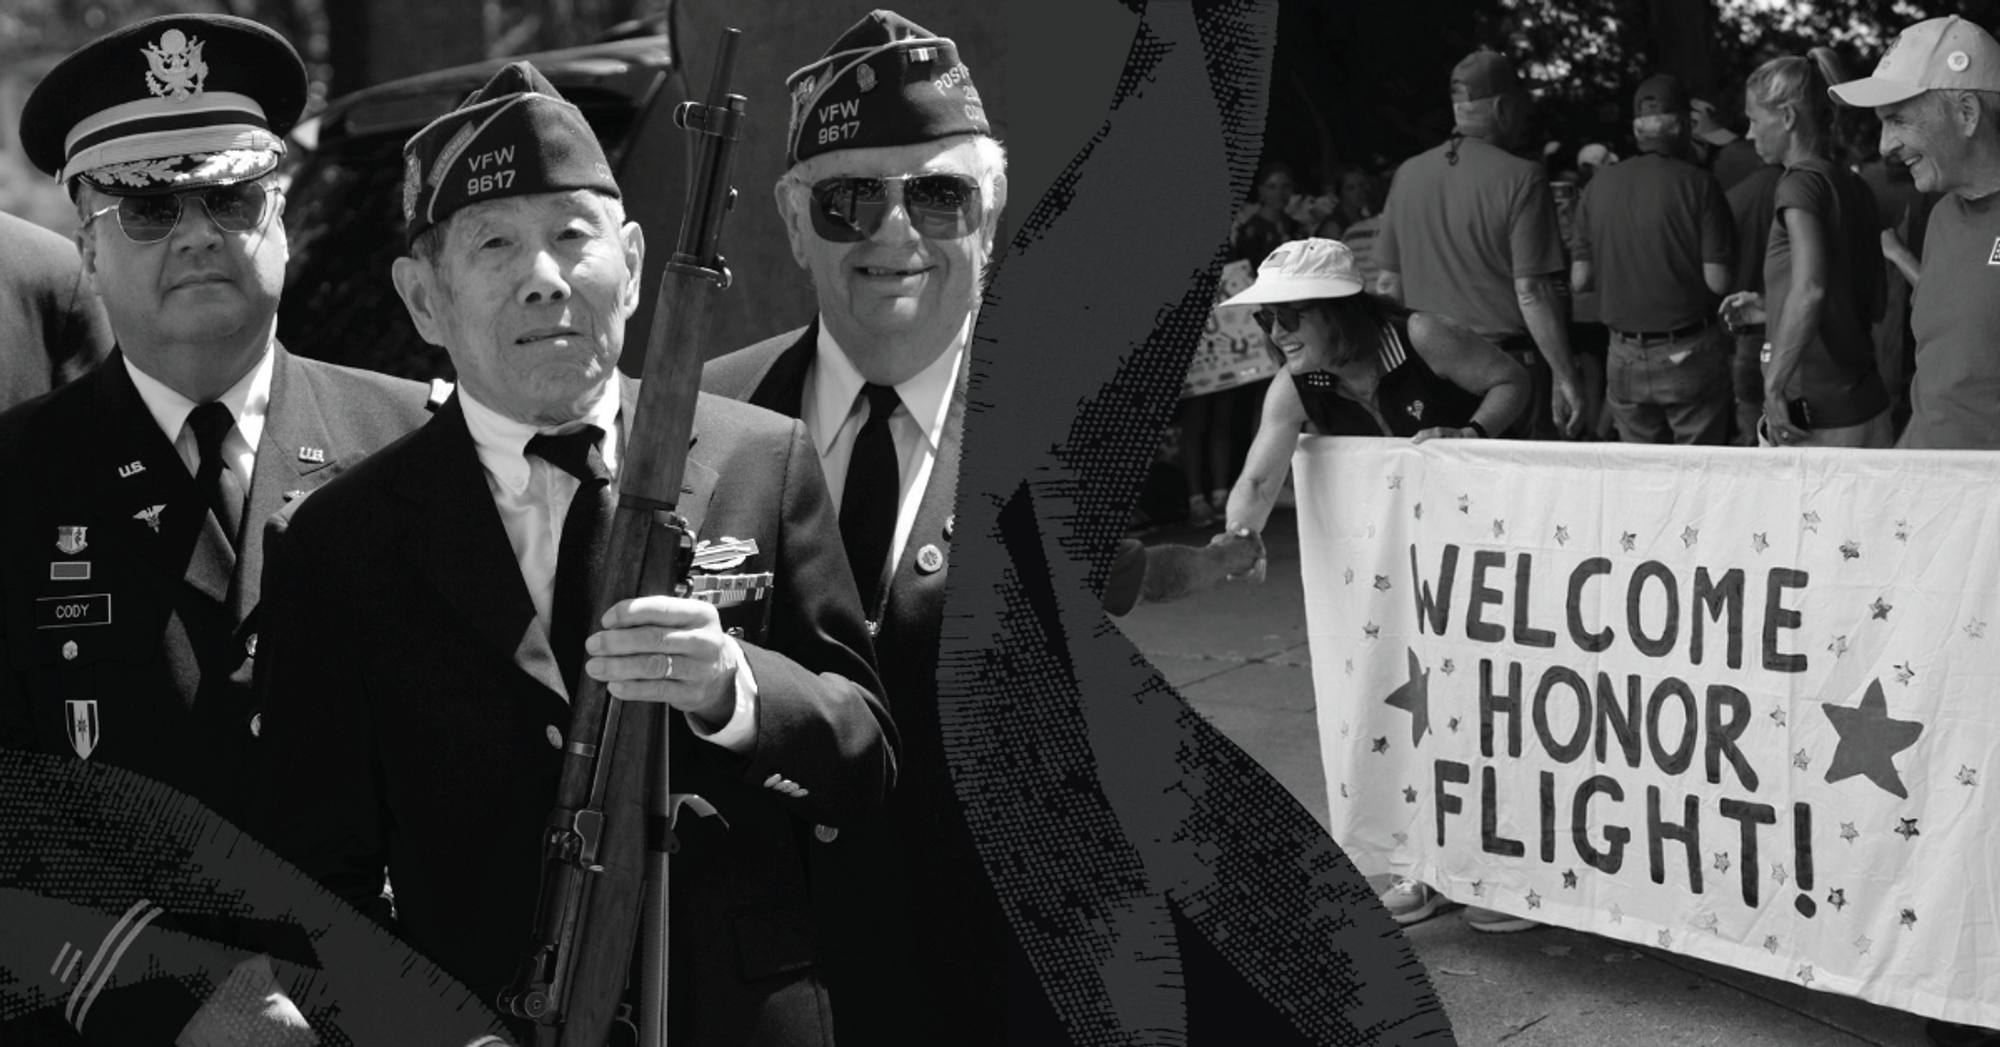 Honor Flight: Taking Veterans to Visit Their Memorials in Washington DC